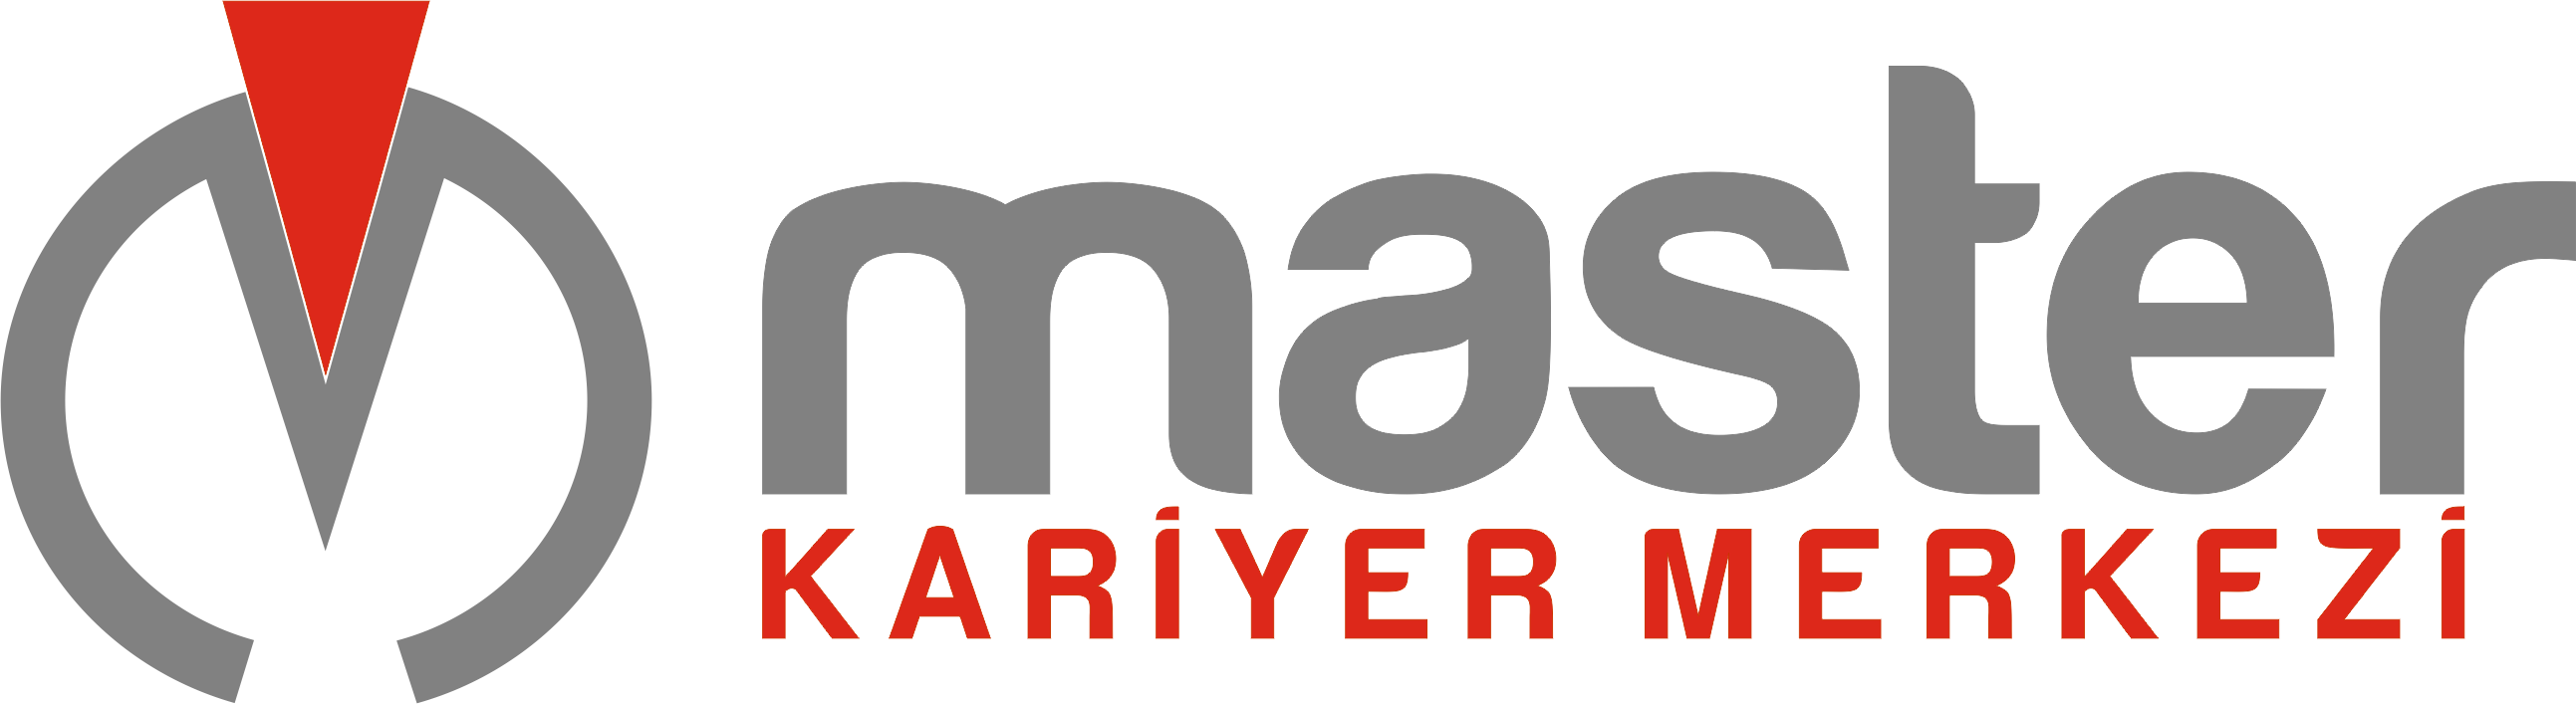 master kariyer merkezi logosu